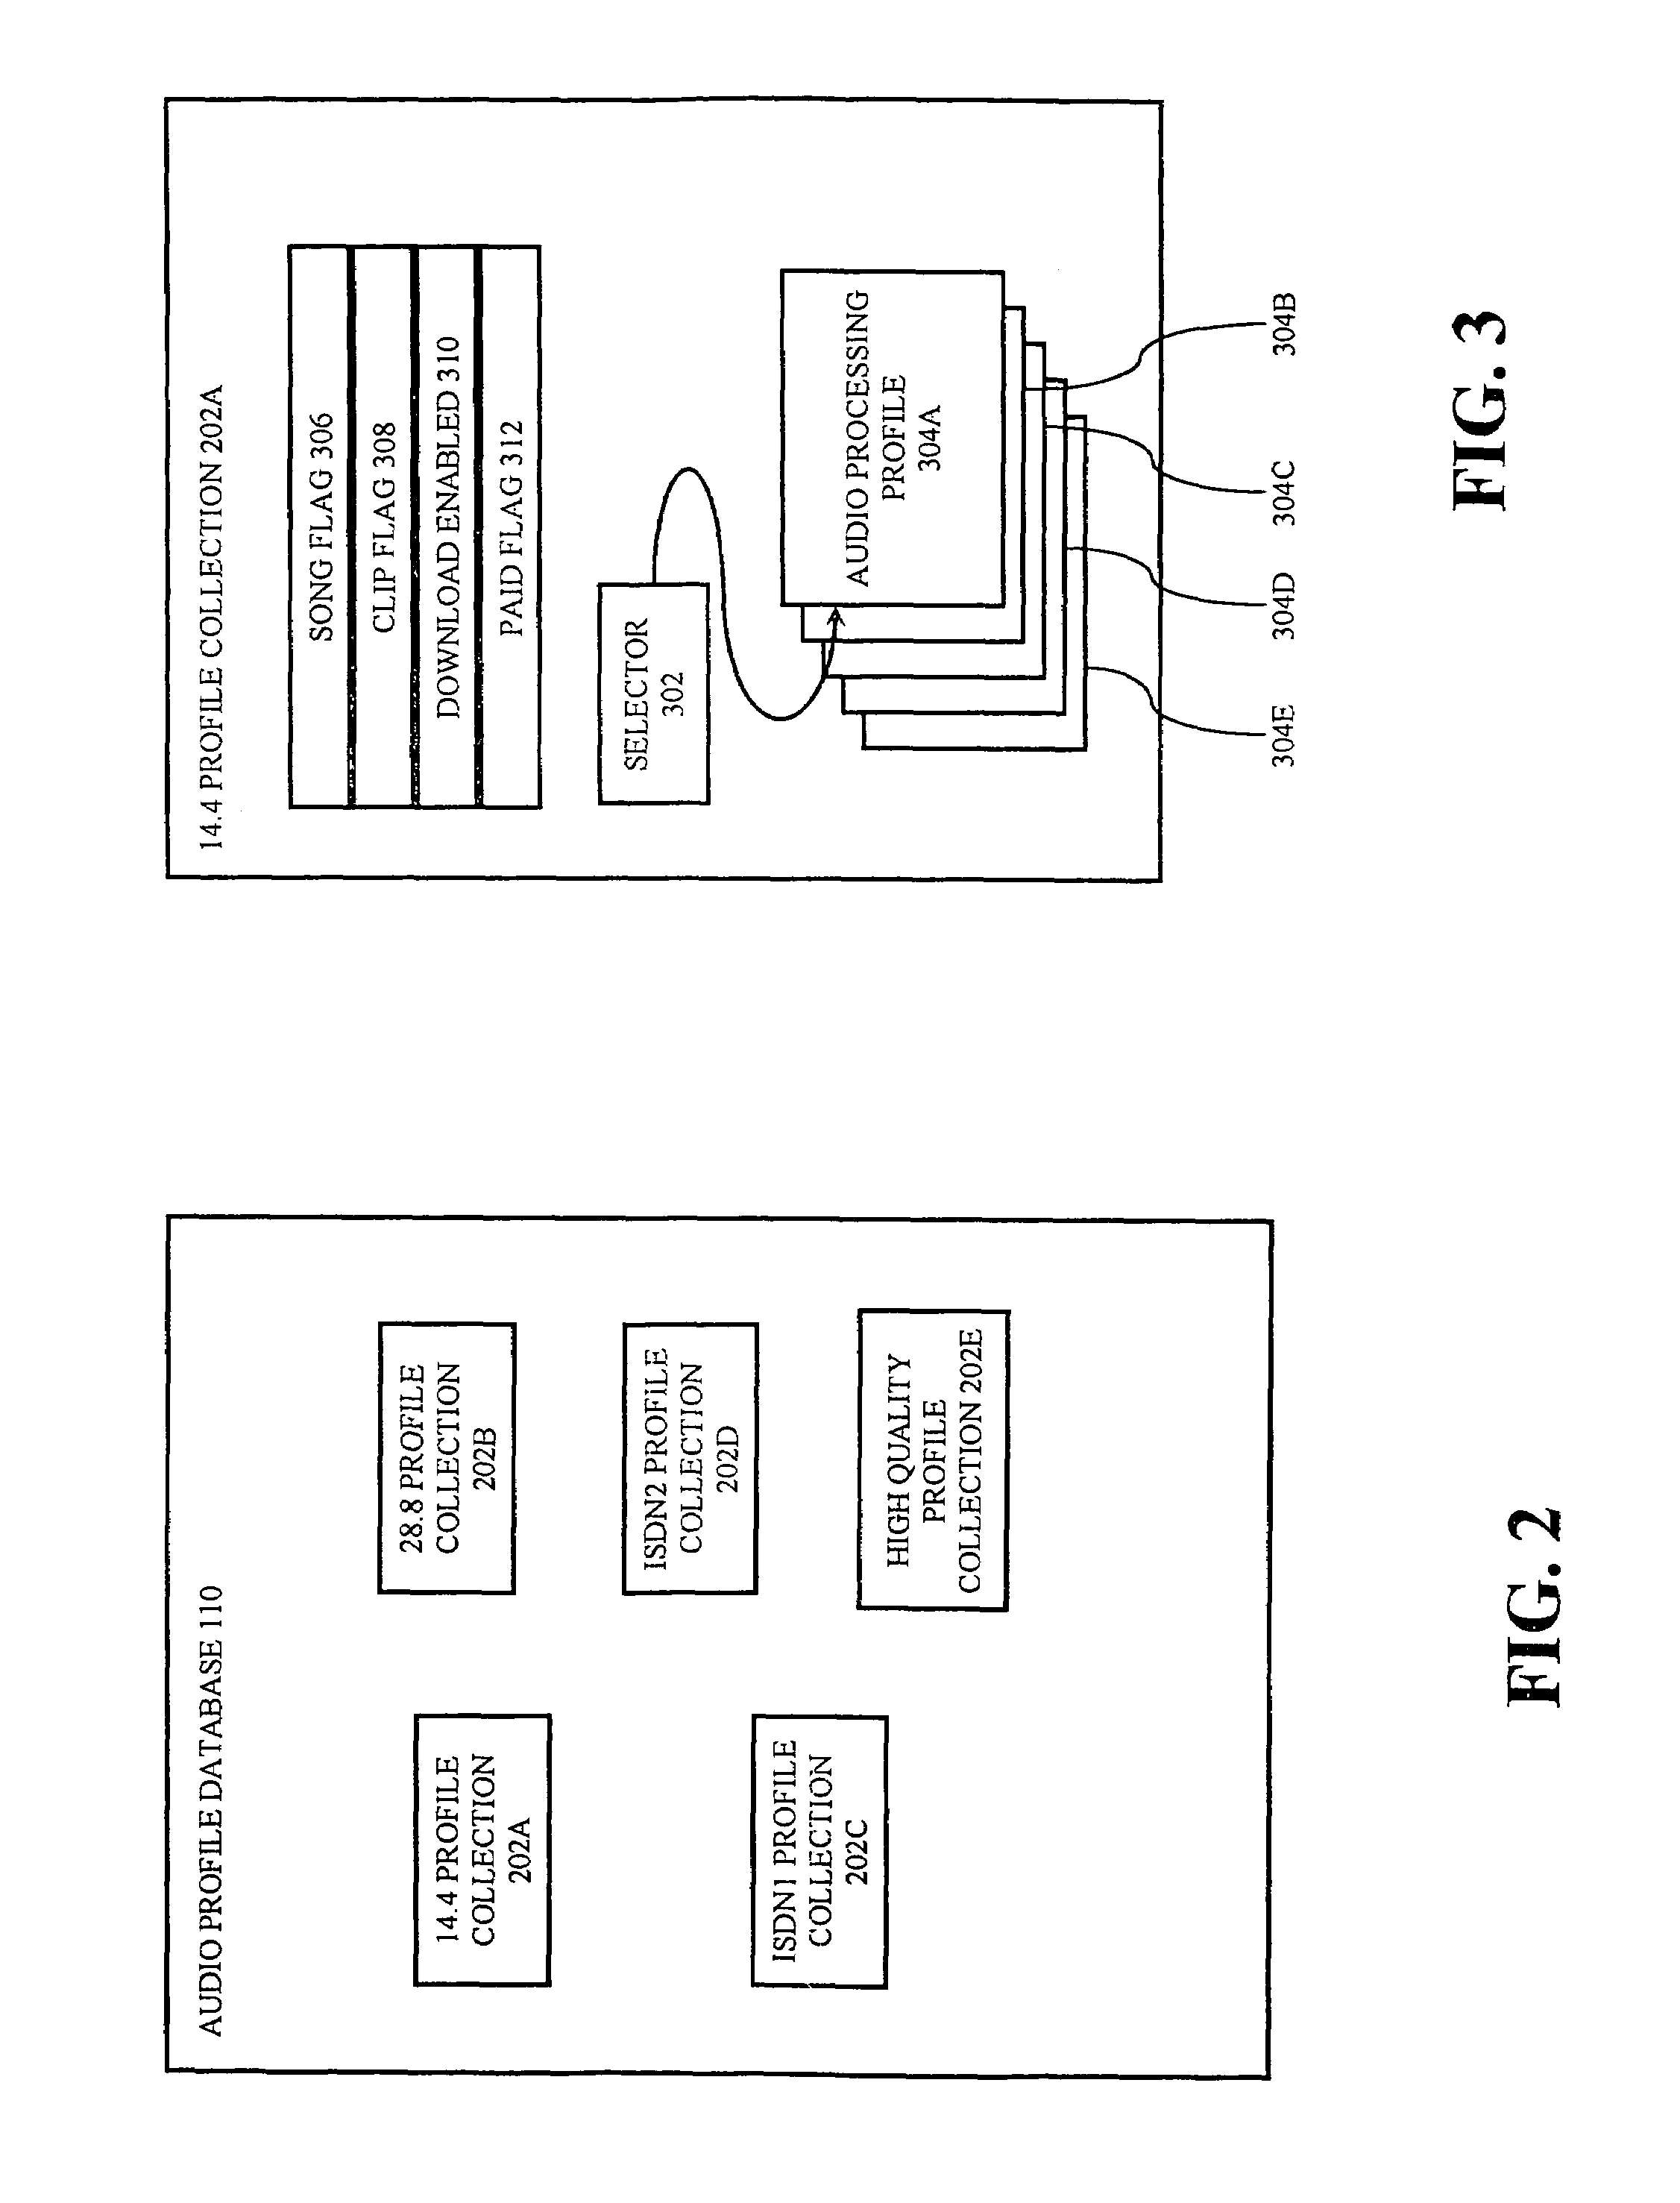 Digital audio signal filtering mechanism and method